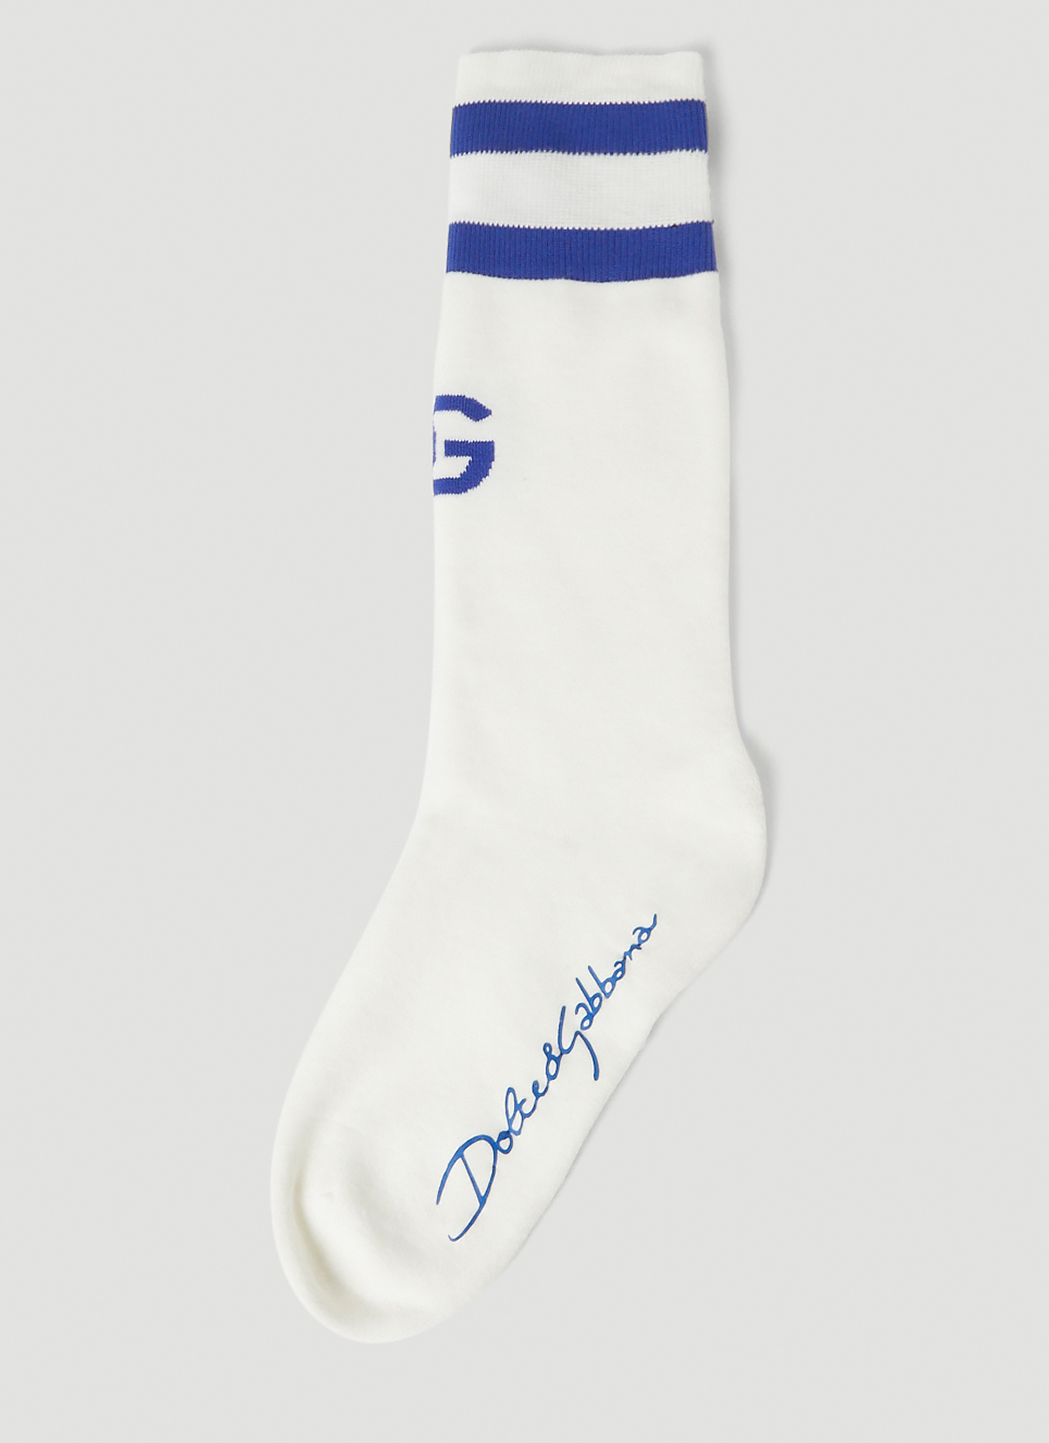 Dolce&Gabbana Mediterranean Sport Socks